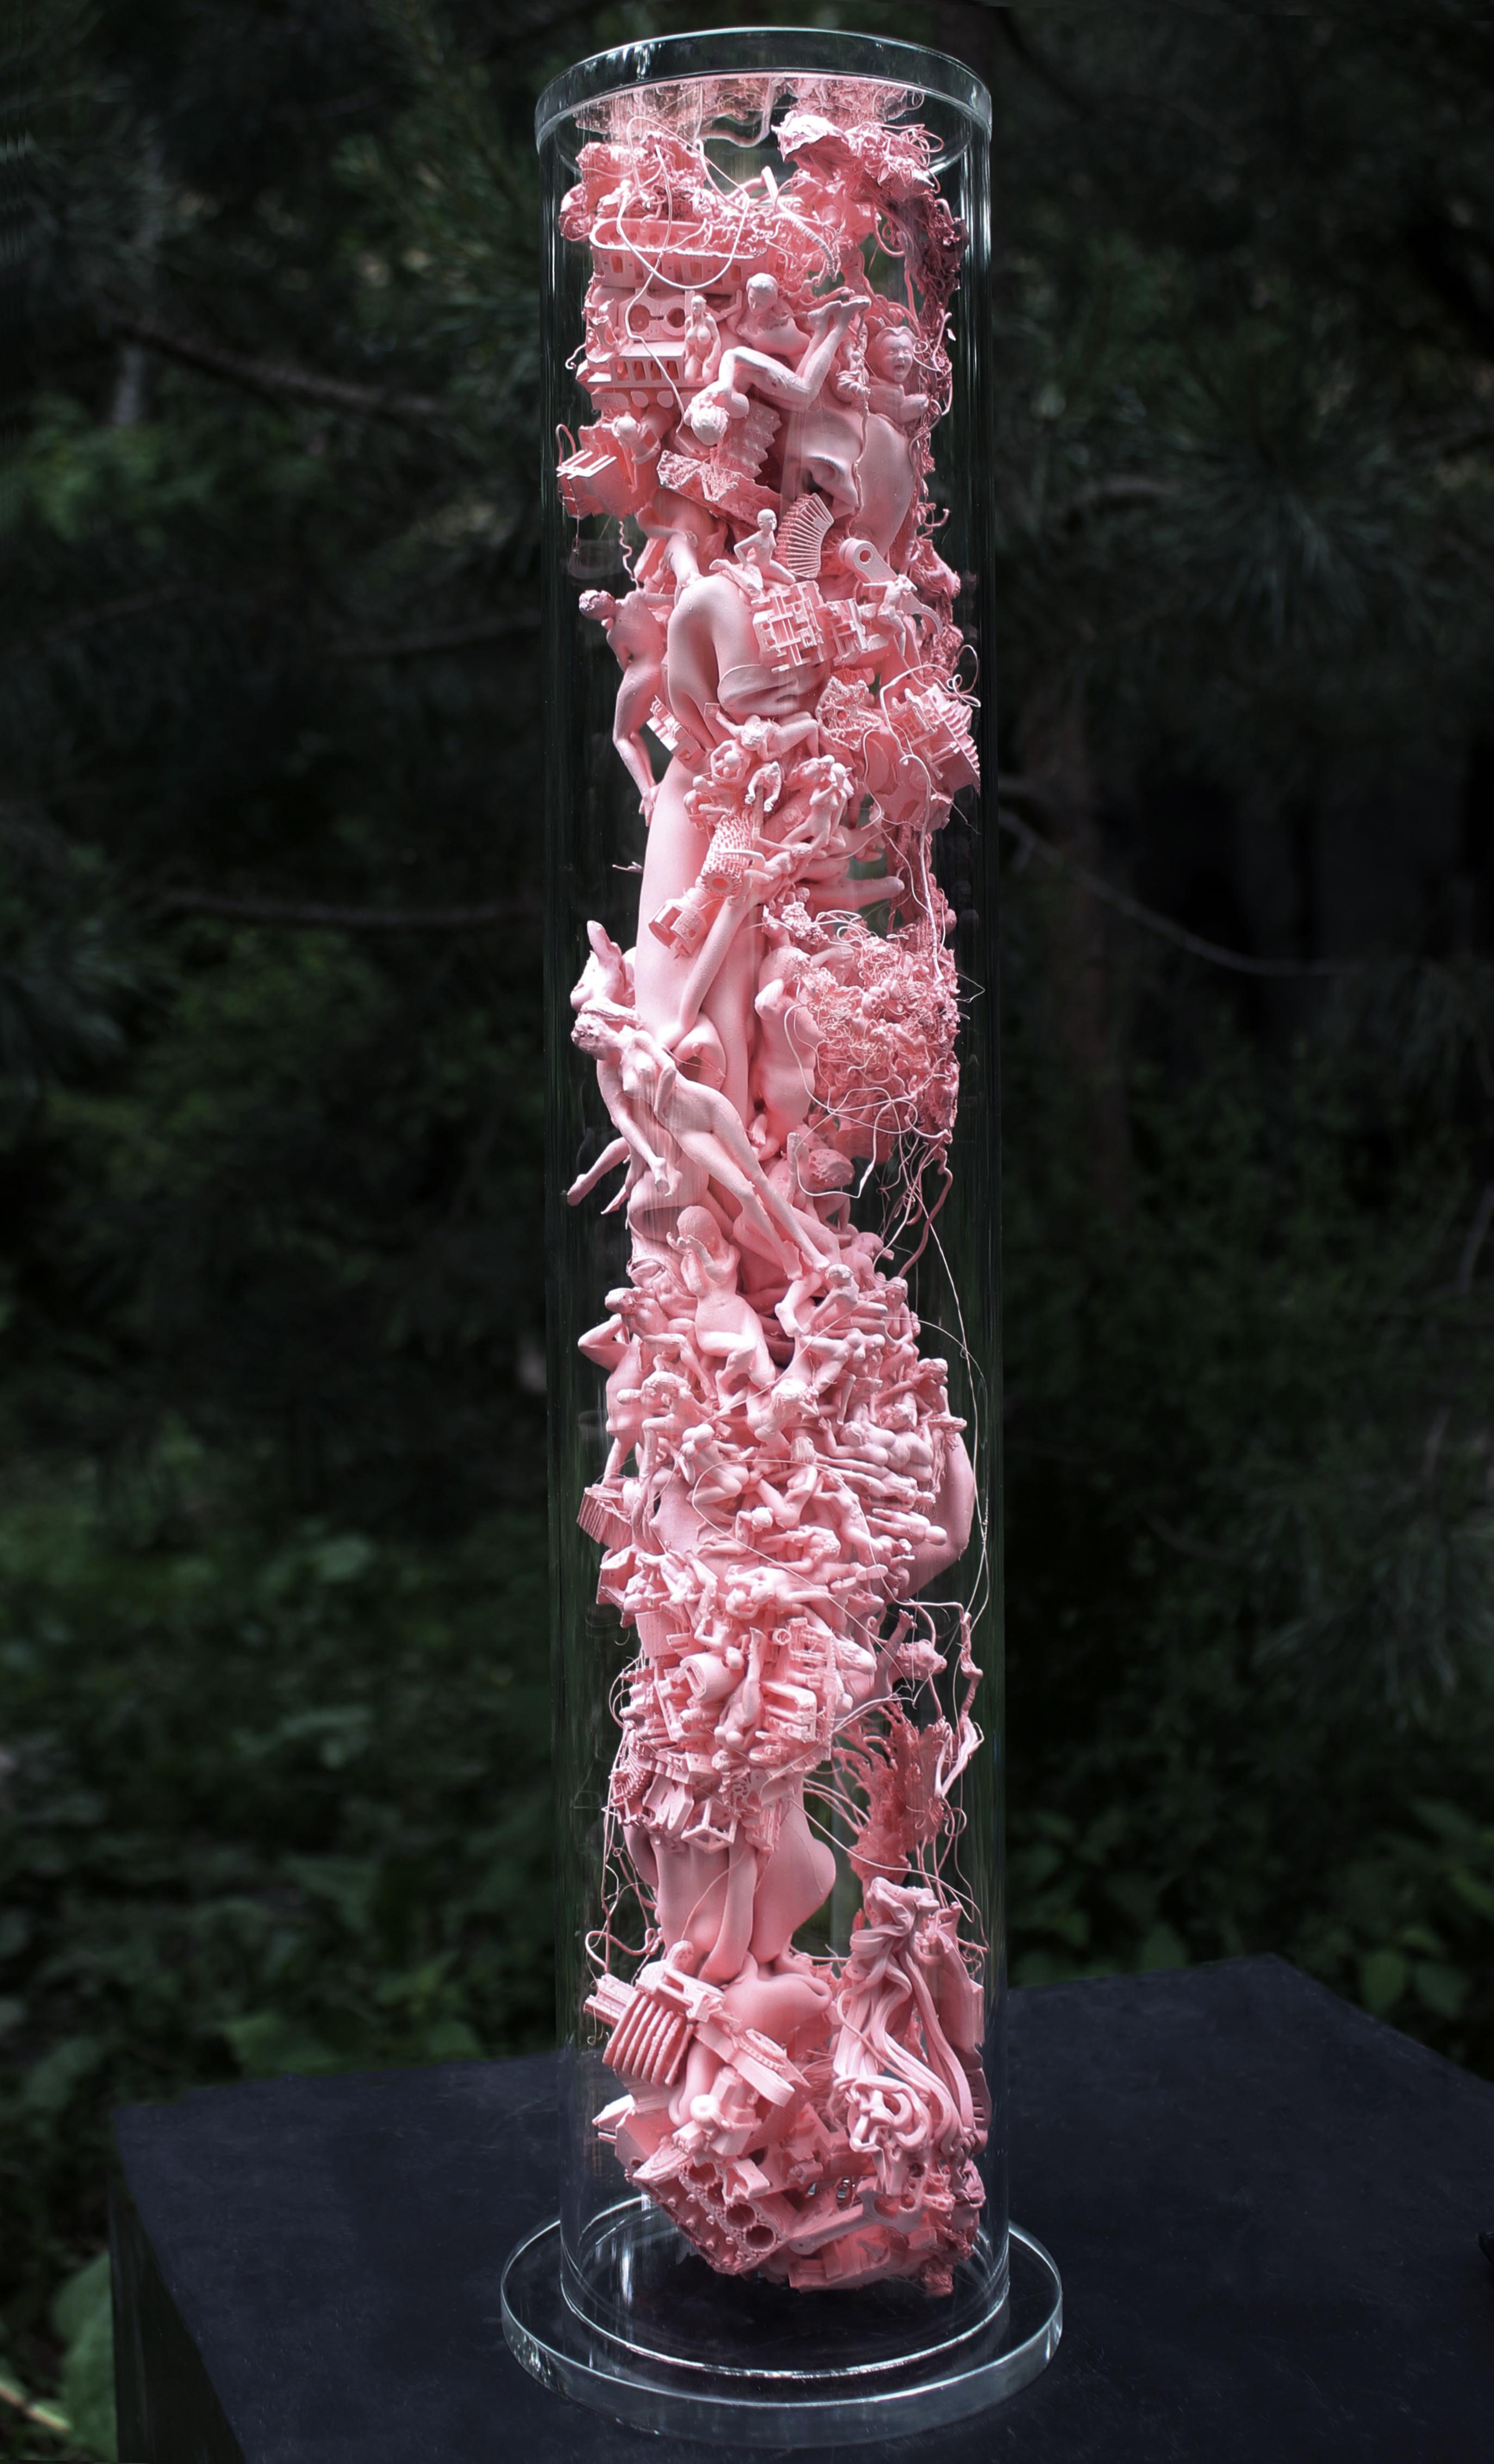 "Female Substance" Sculpture 20" x 4" inch by Dmitry Kawarga - Mixed Media Art by Dmitry Kawarga 